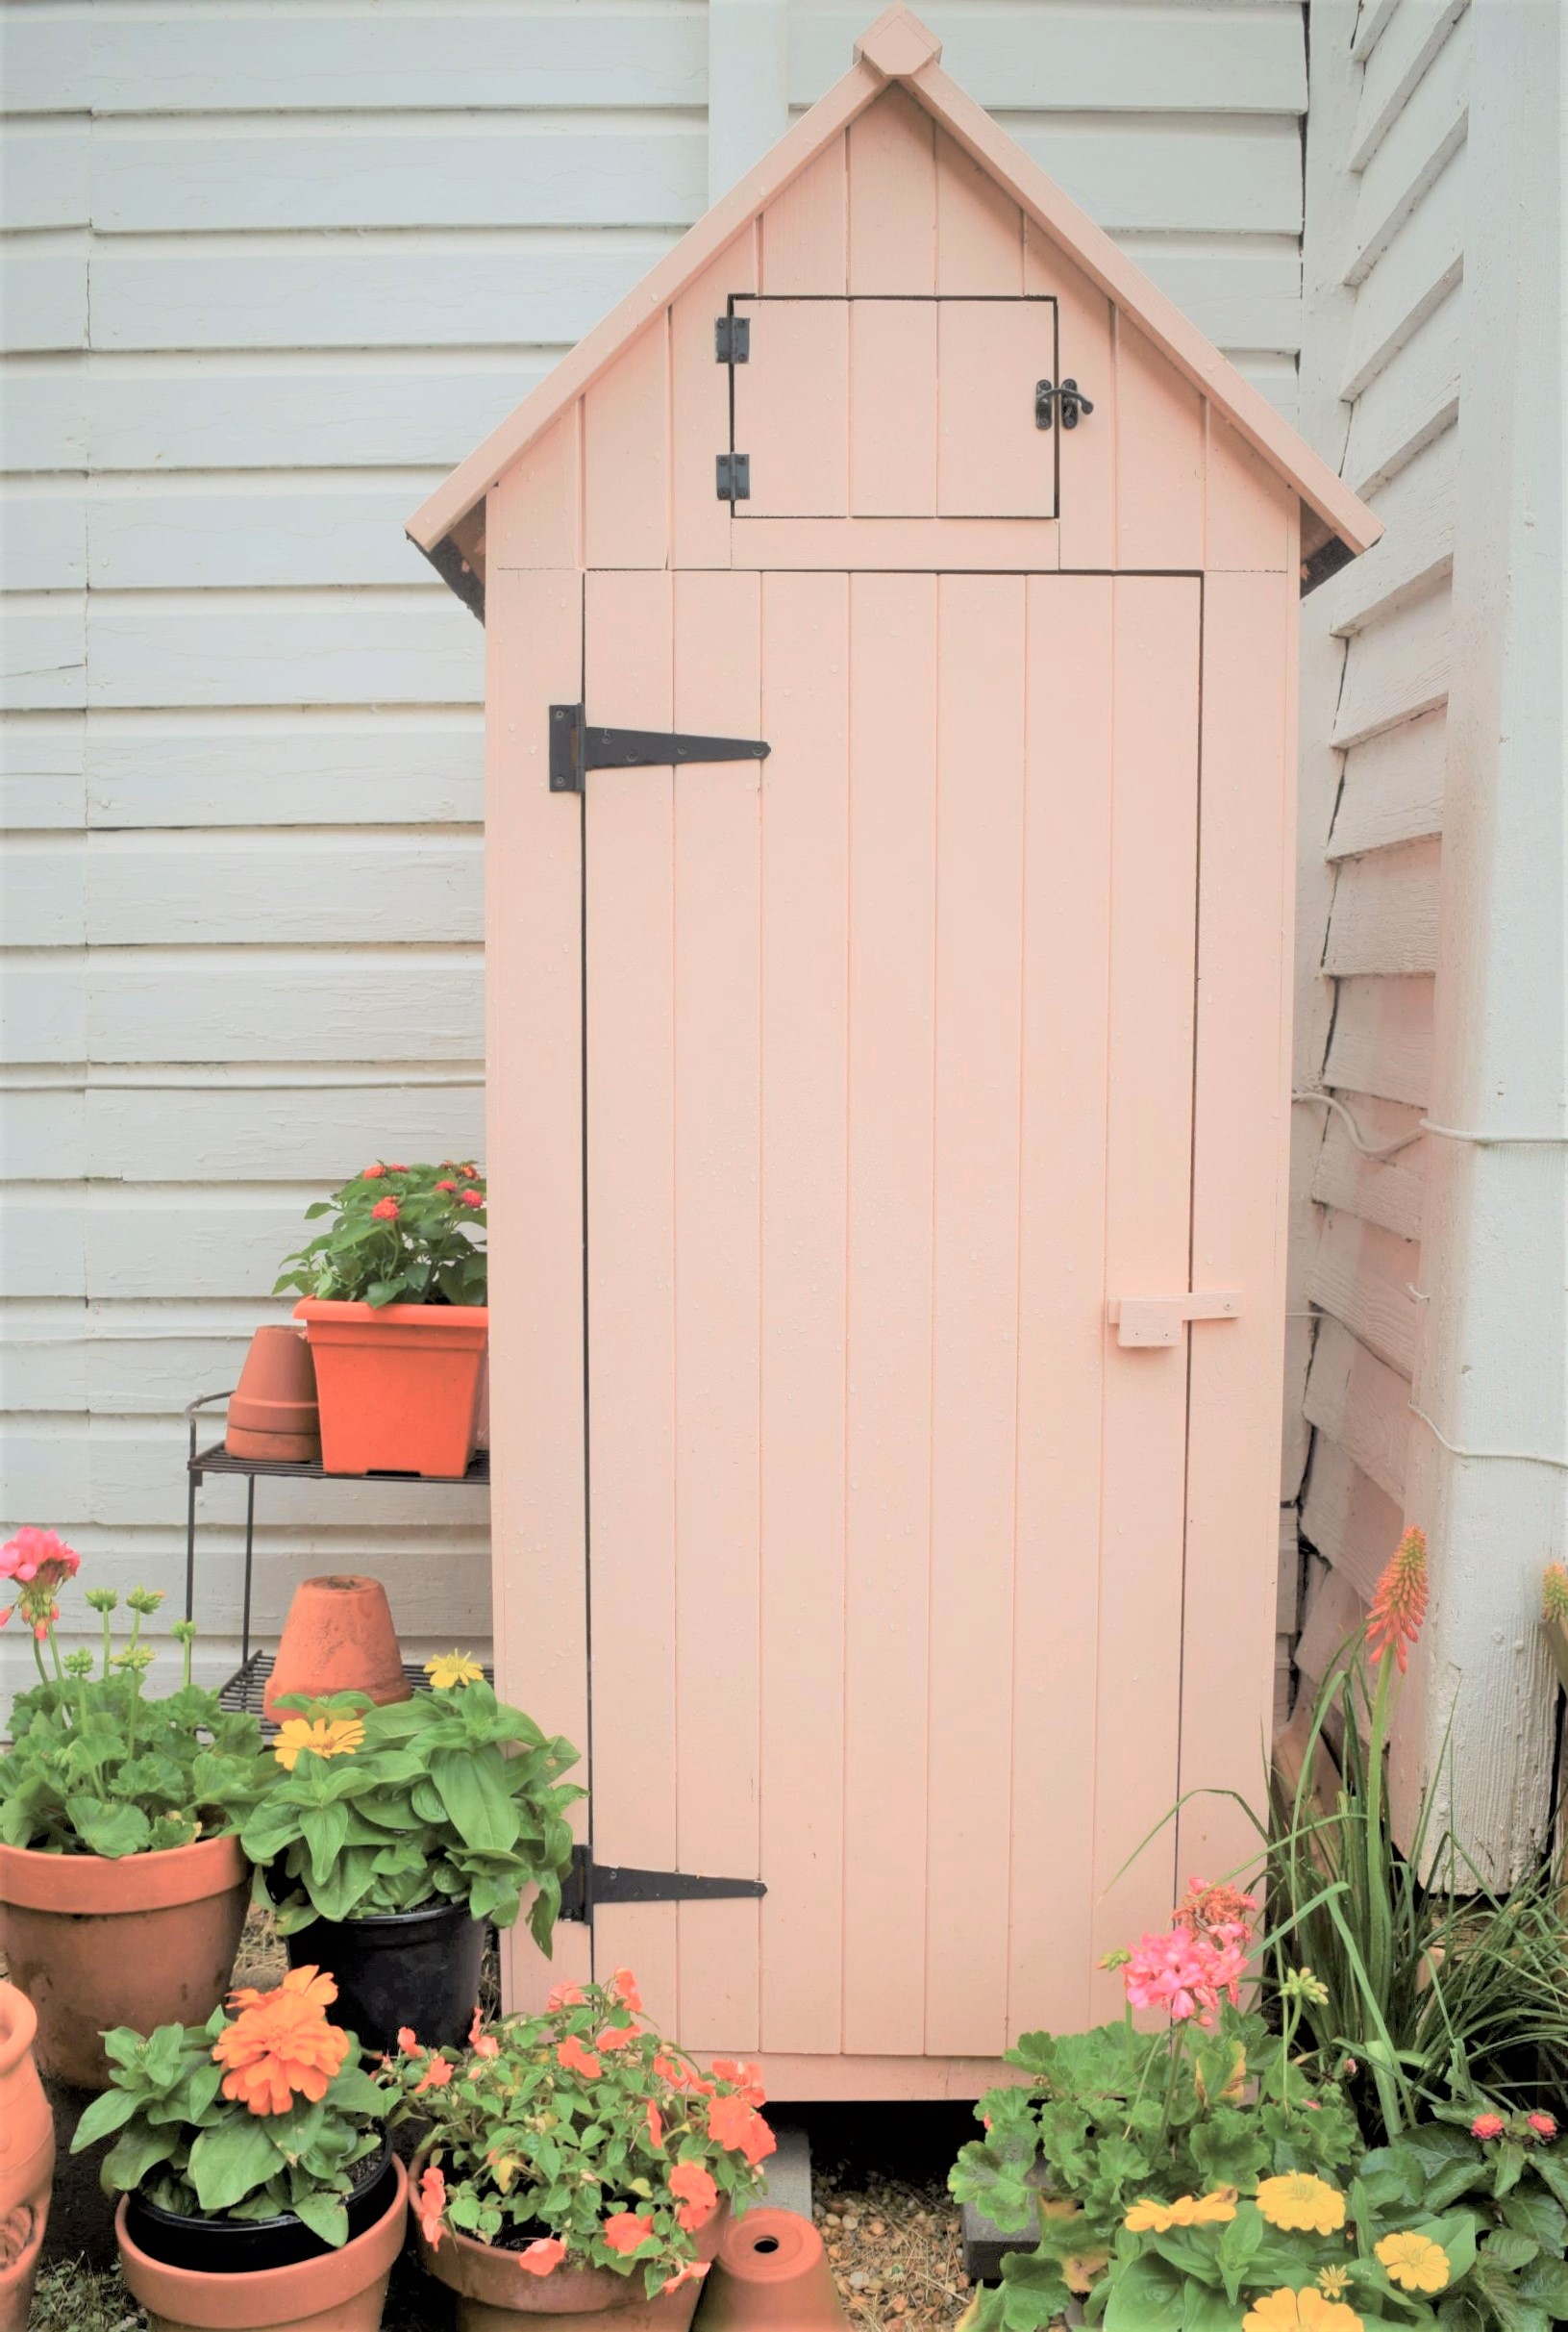 seasonal southern slow lifestyle pink garden shed